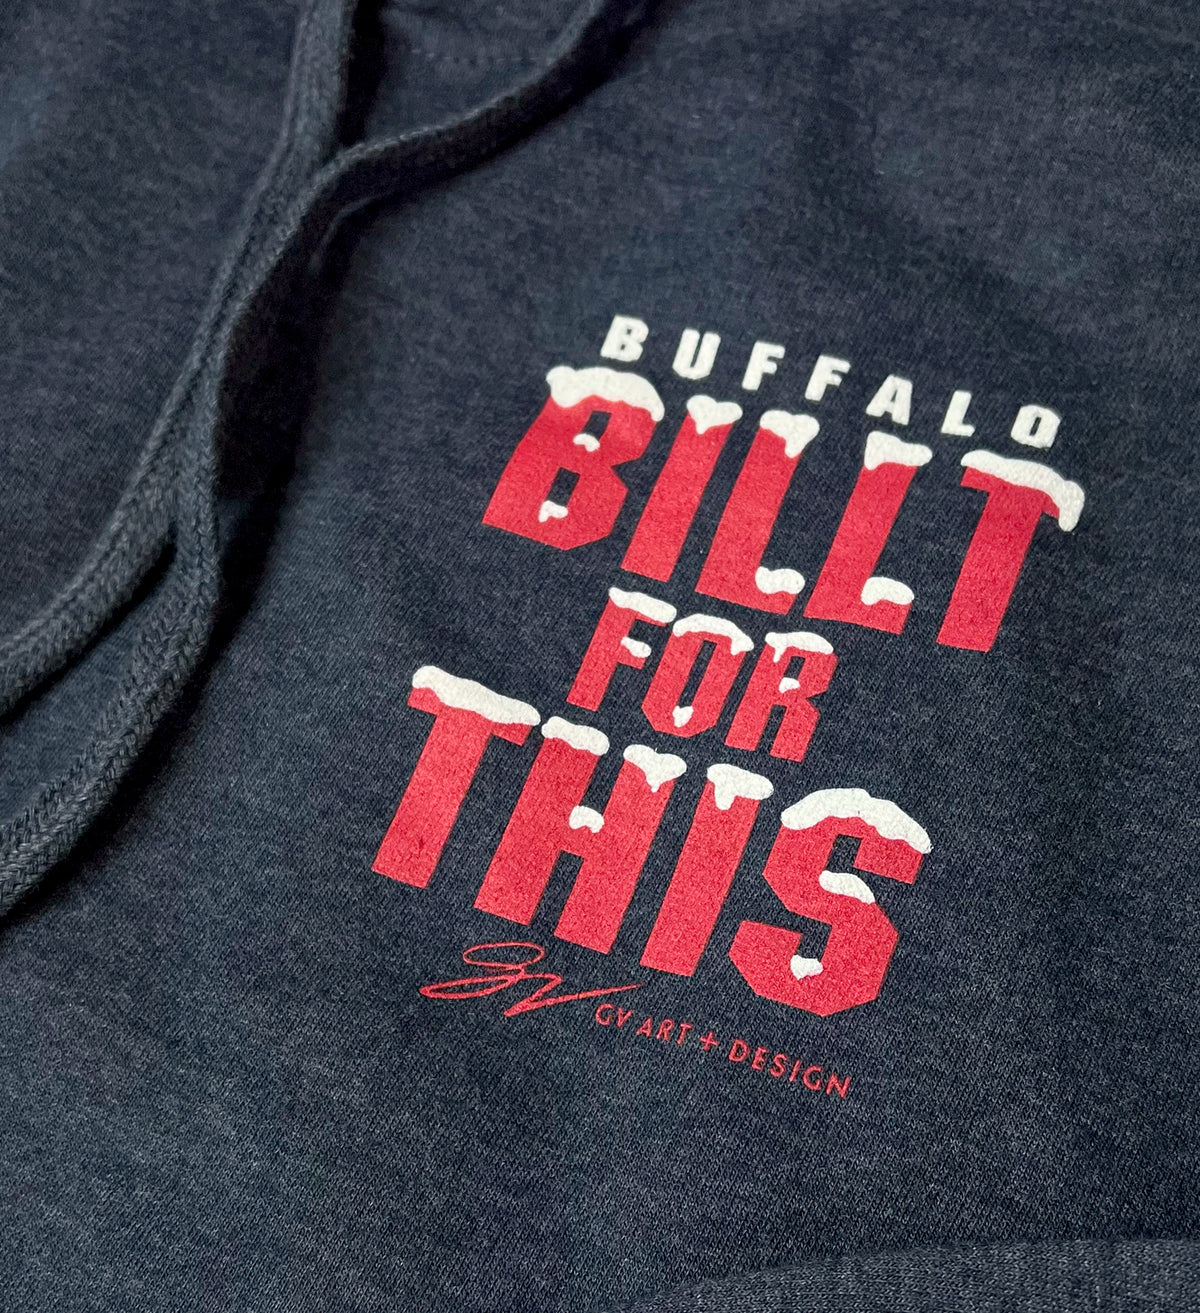 Buffalo “Billt For This” Navy Hooded Sweatshirt